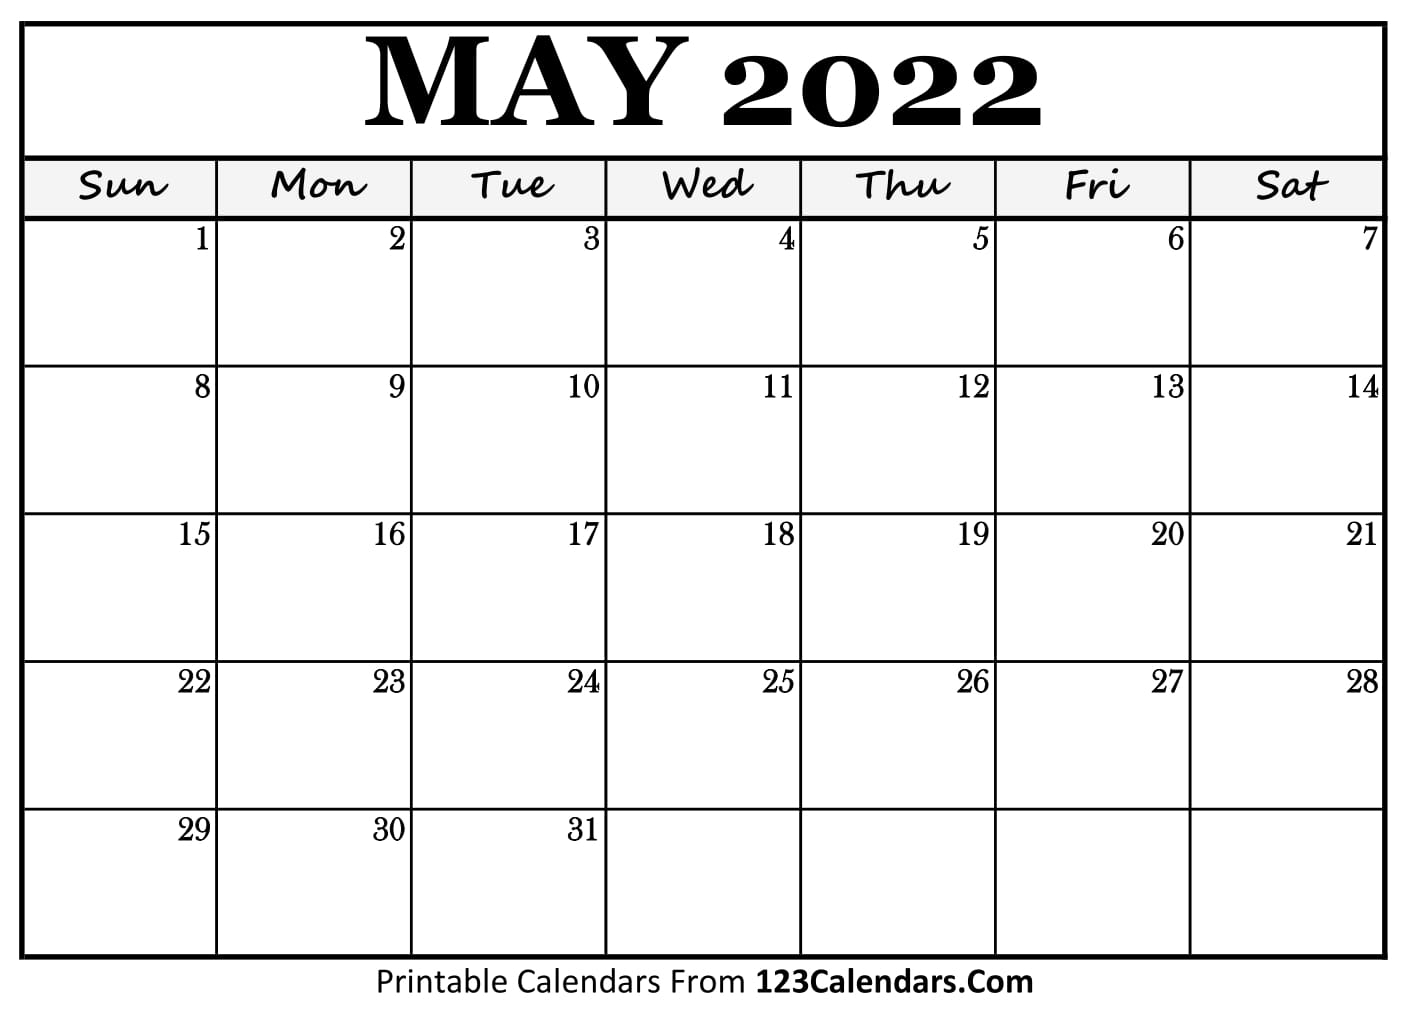 May 2022 Calendar Printable May 2022 Calendar Templates - 123Calendars.com